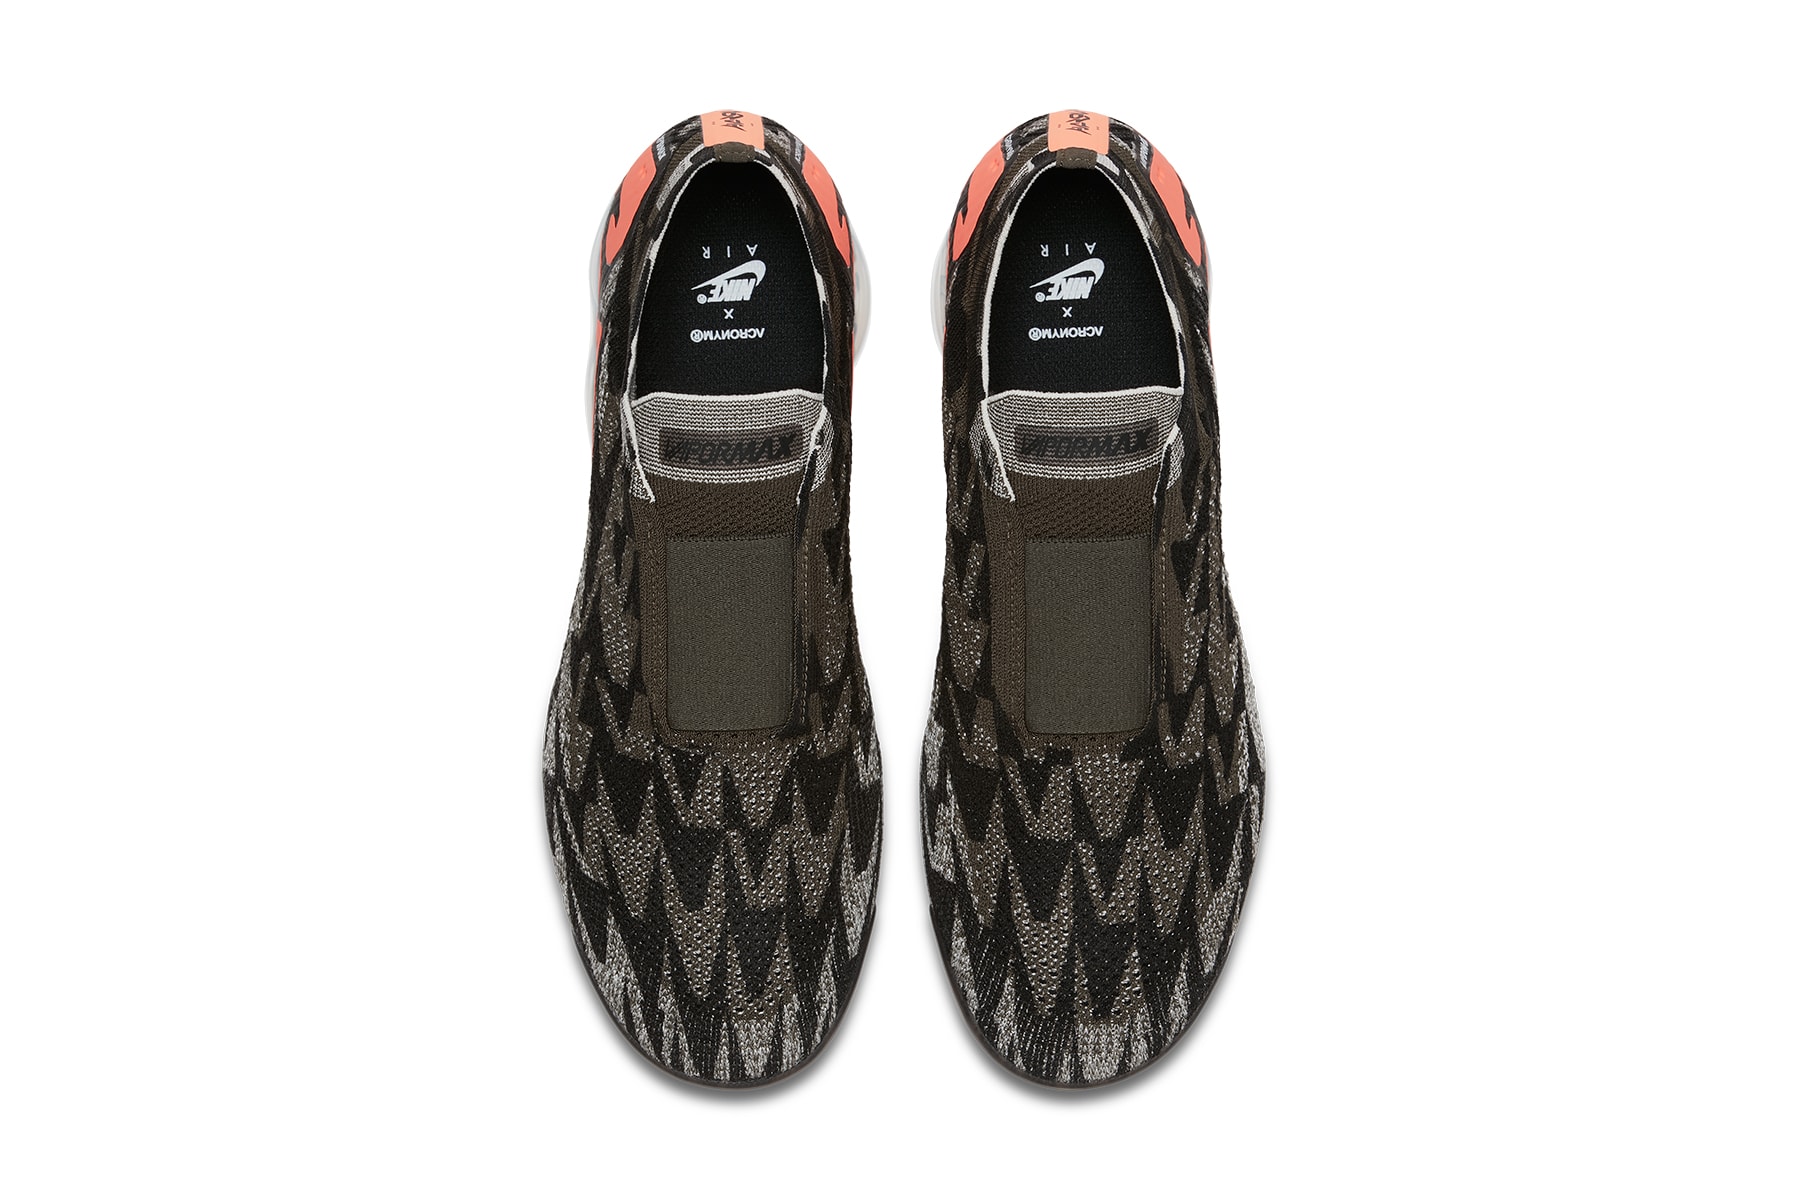 ACRONYM x Nike Air VaporMax Moc 2 Air Max Day footwear release dates 2018 march Errolson Hugh John Mayer